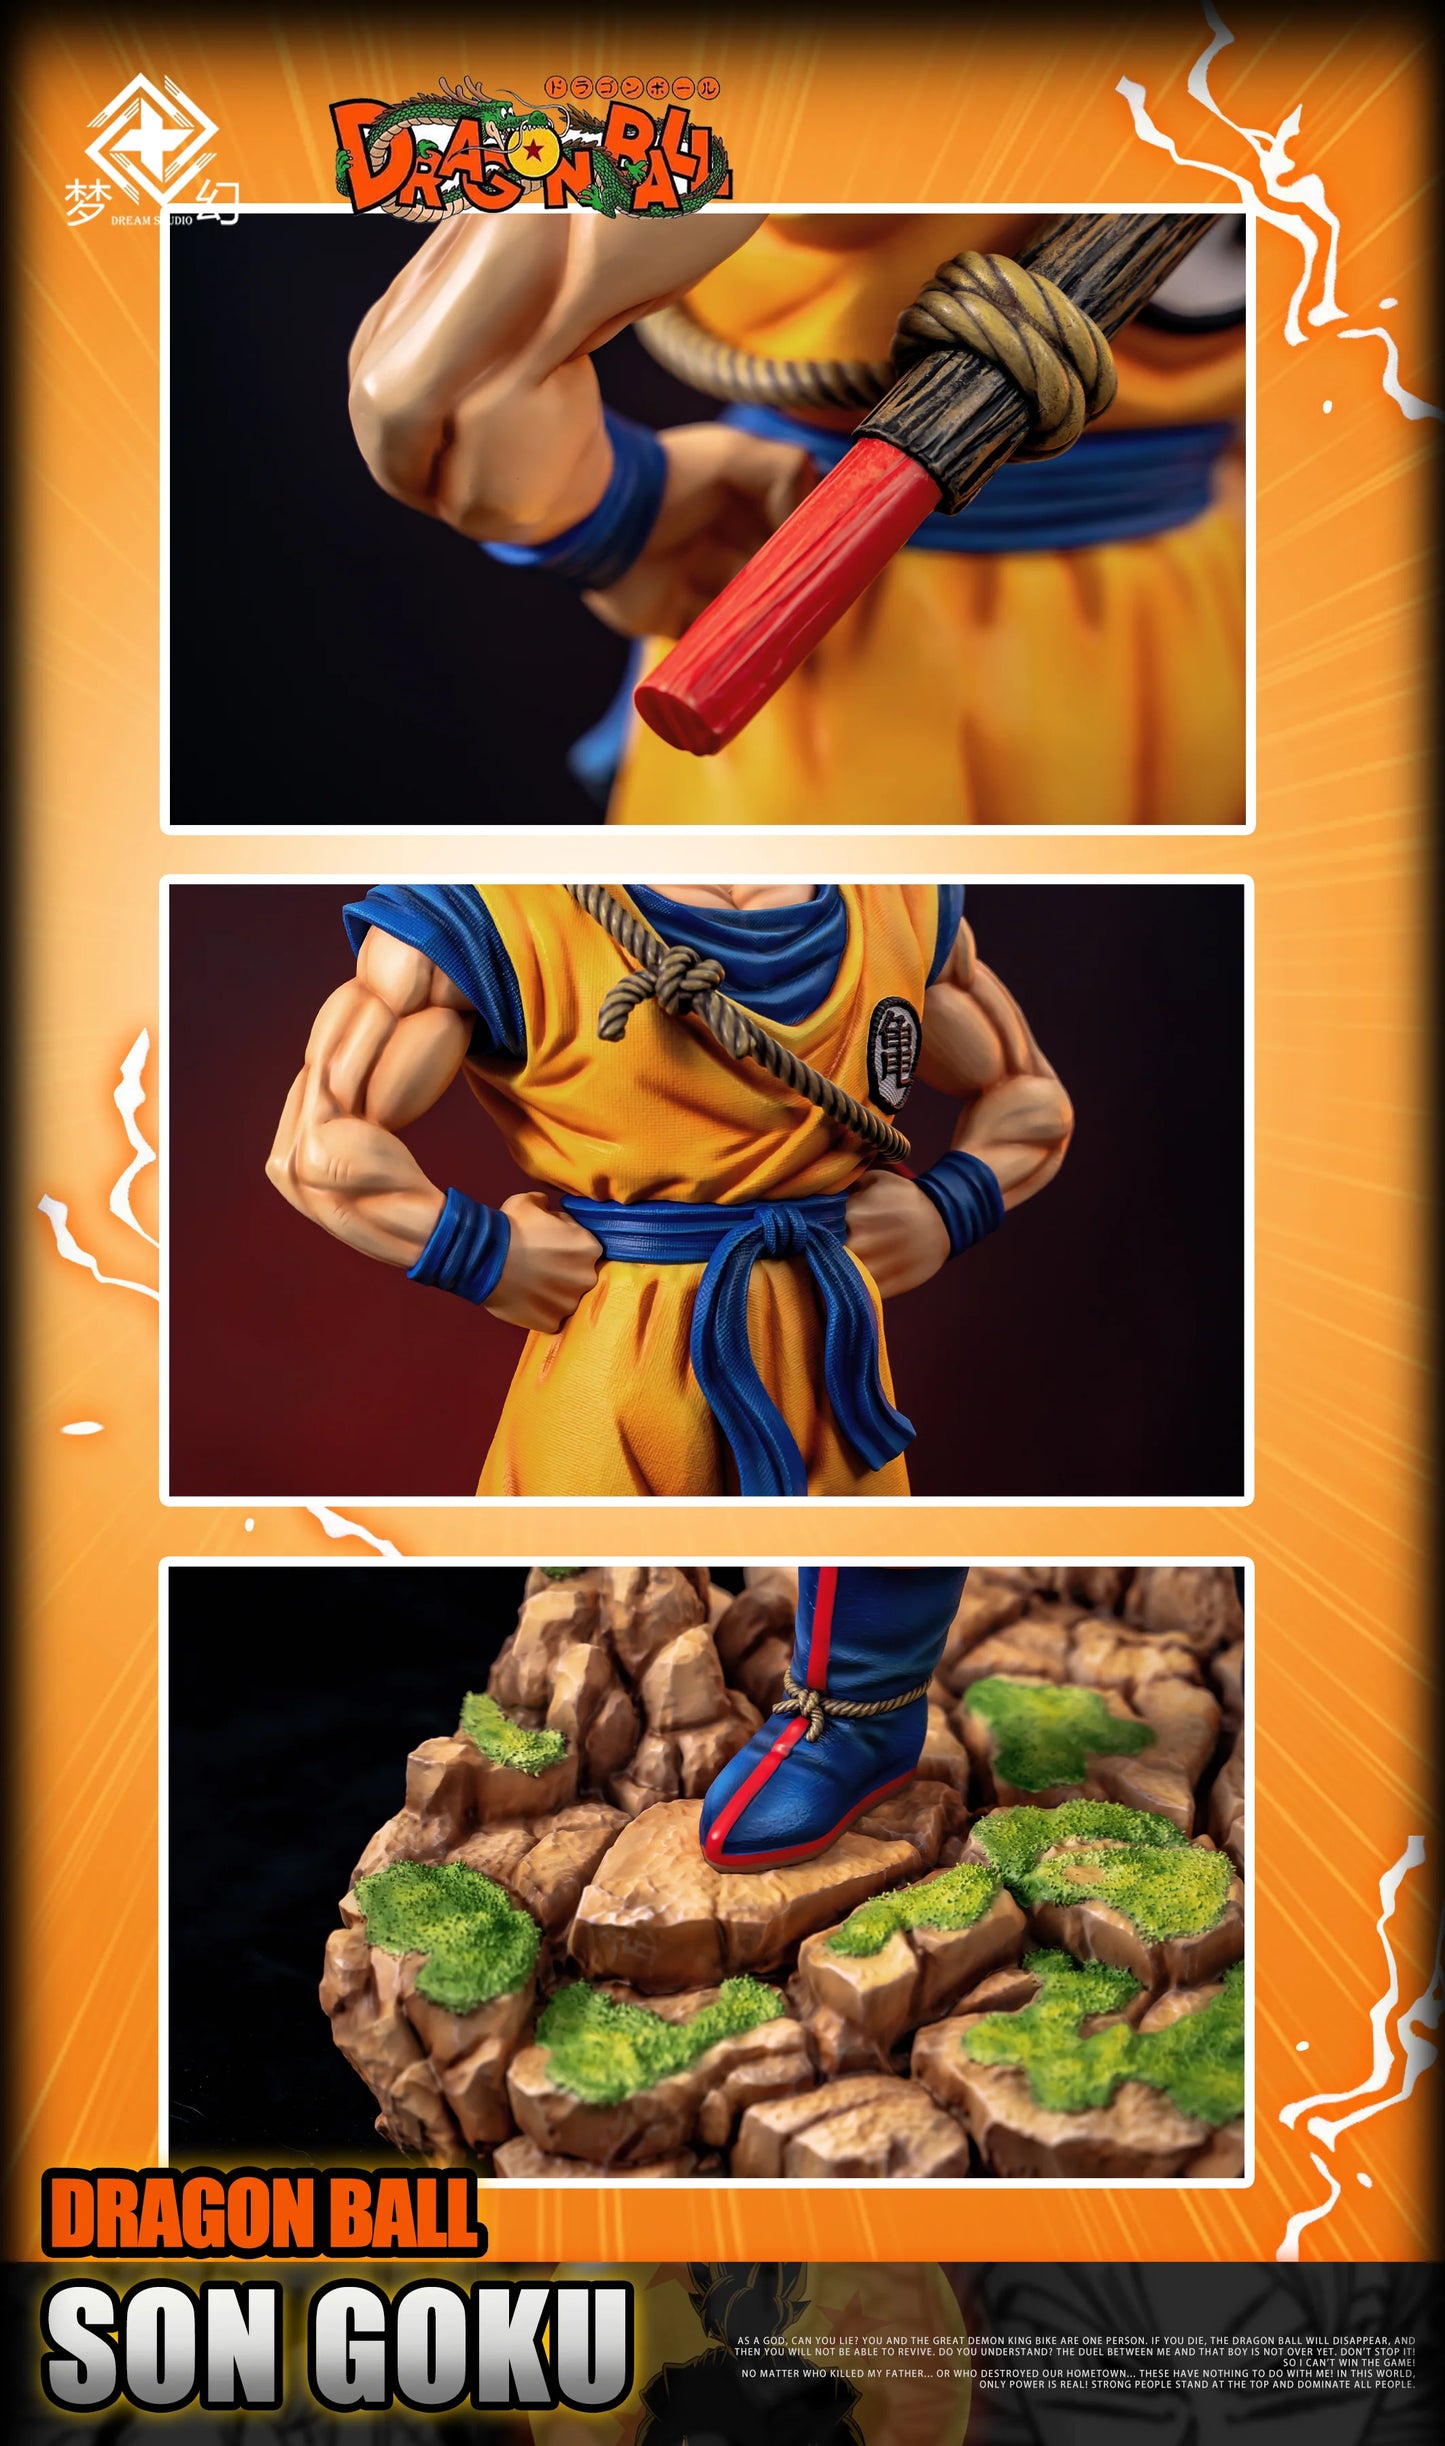 Dream - Goku StatueCorp